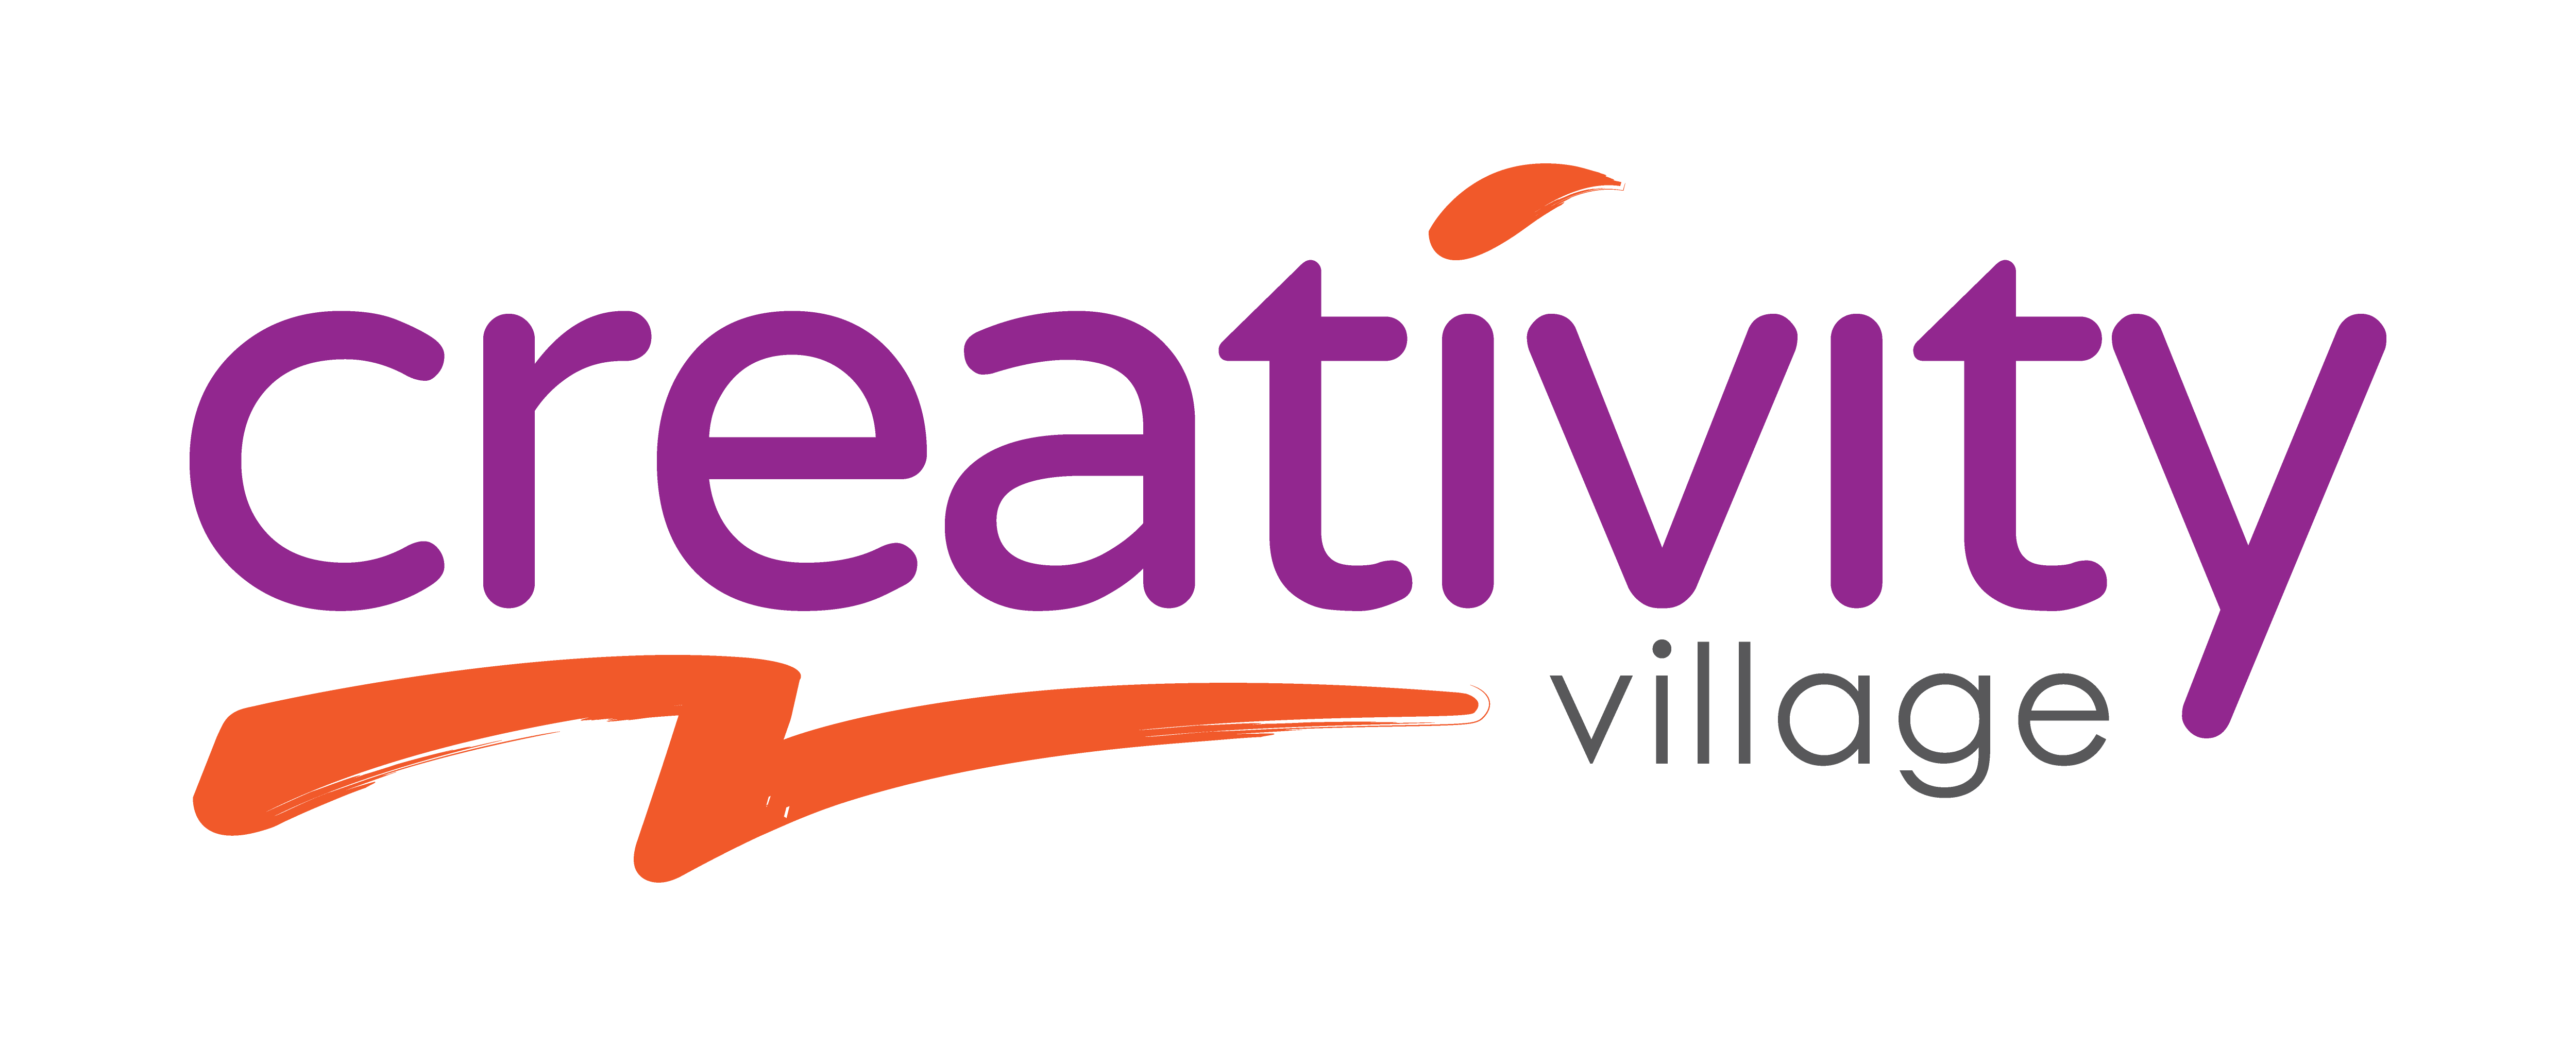 Creativity Village logo